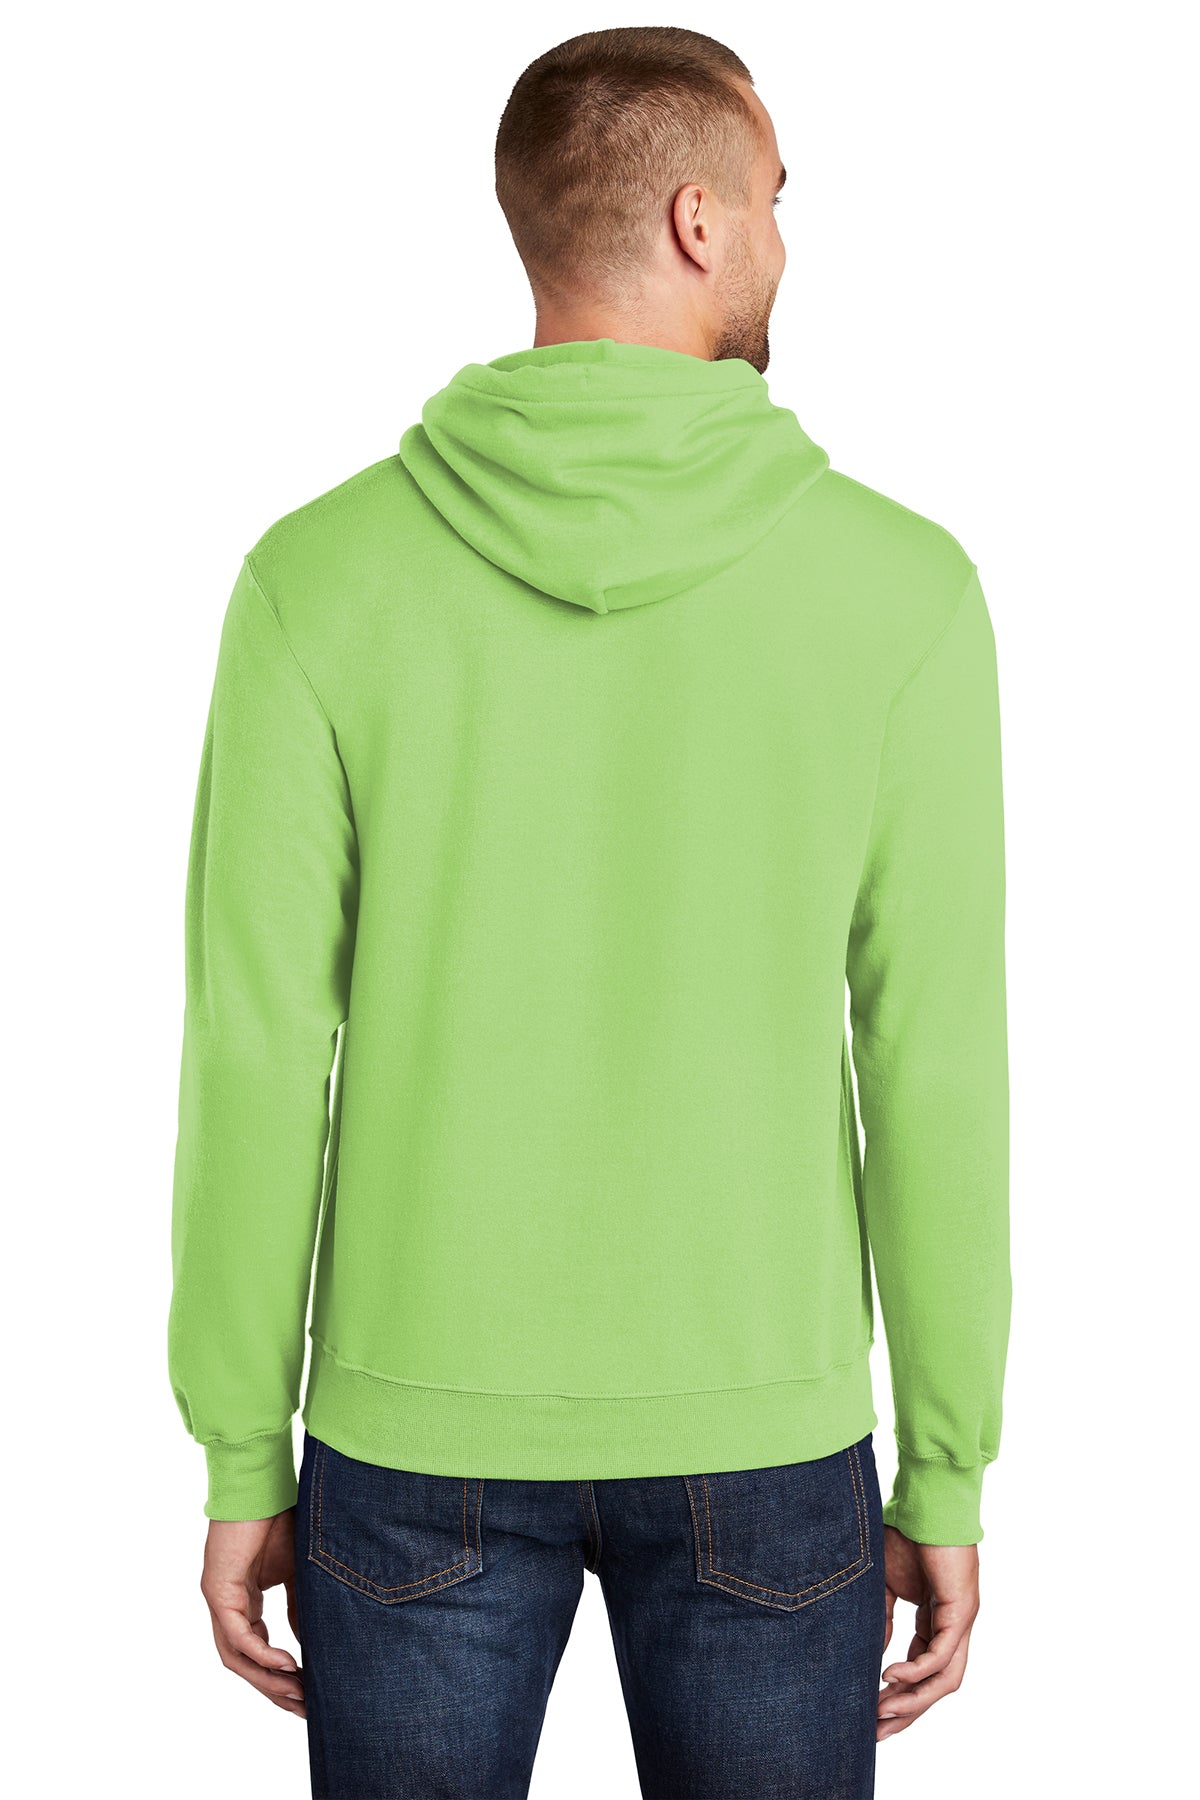 Port & Company PC78H Mens Core Fleece Hooded Sweatshirt Hoodie Lime Green Back